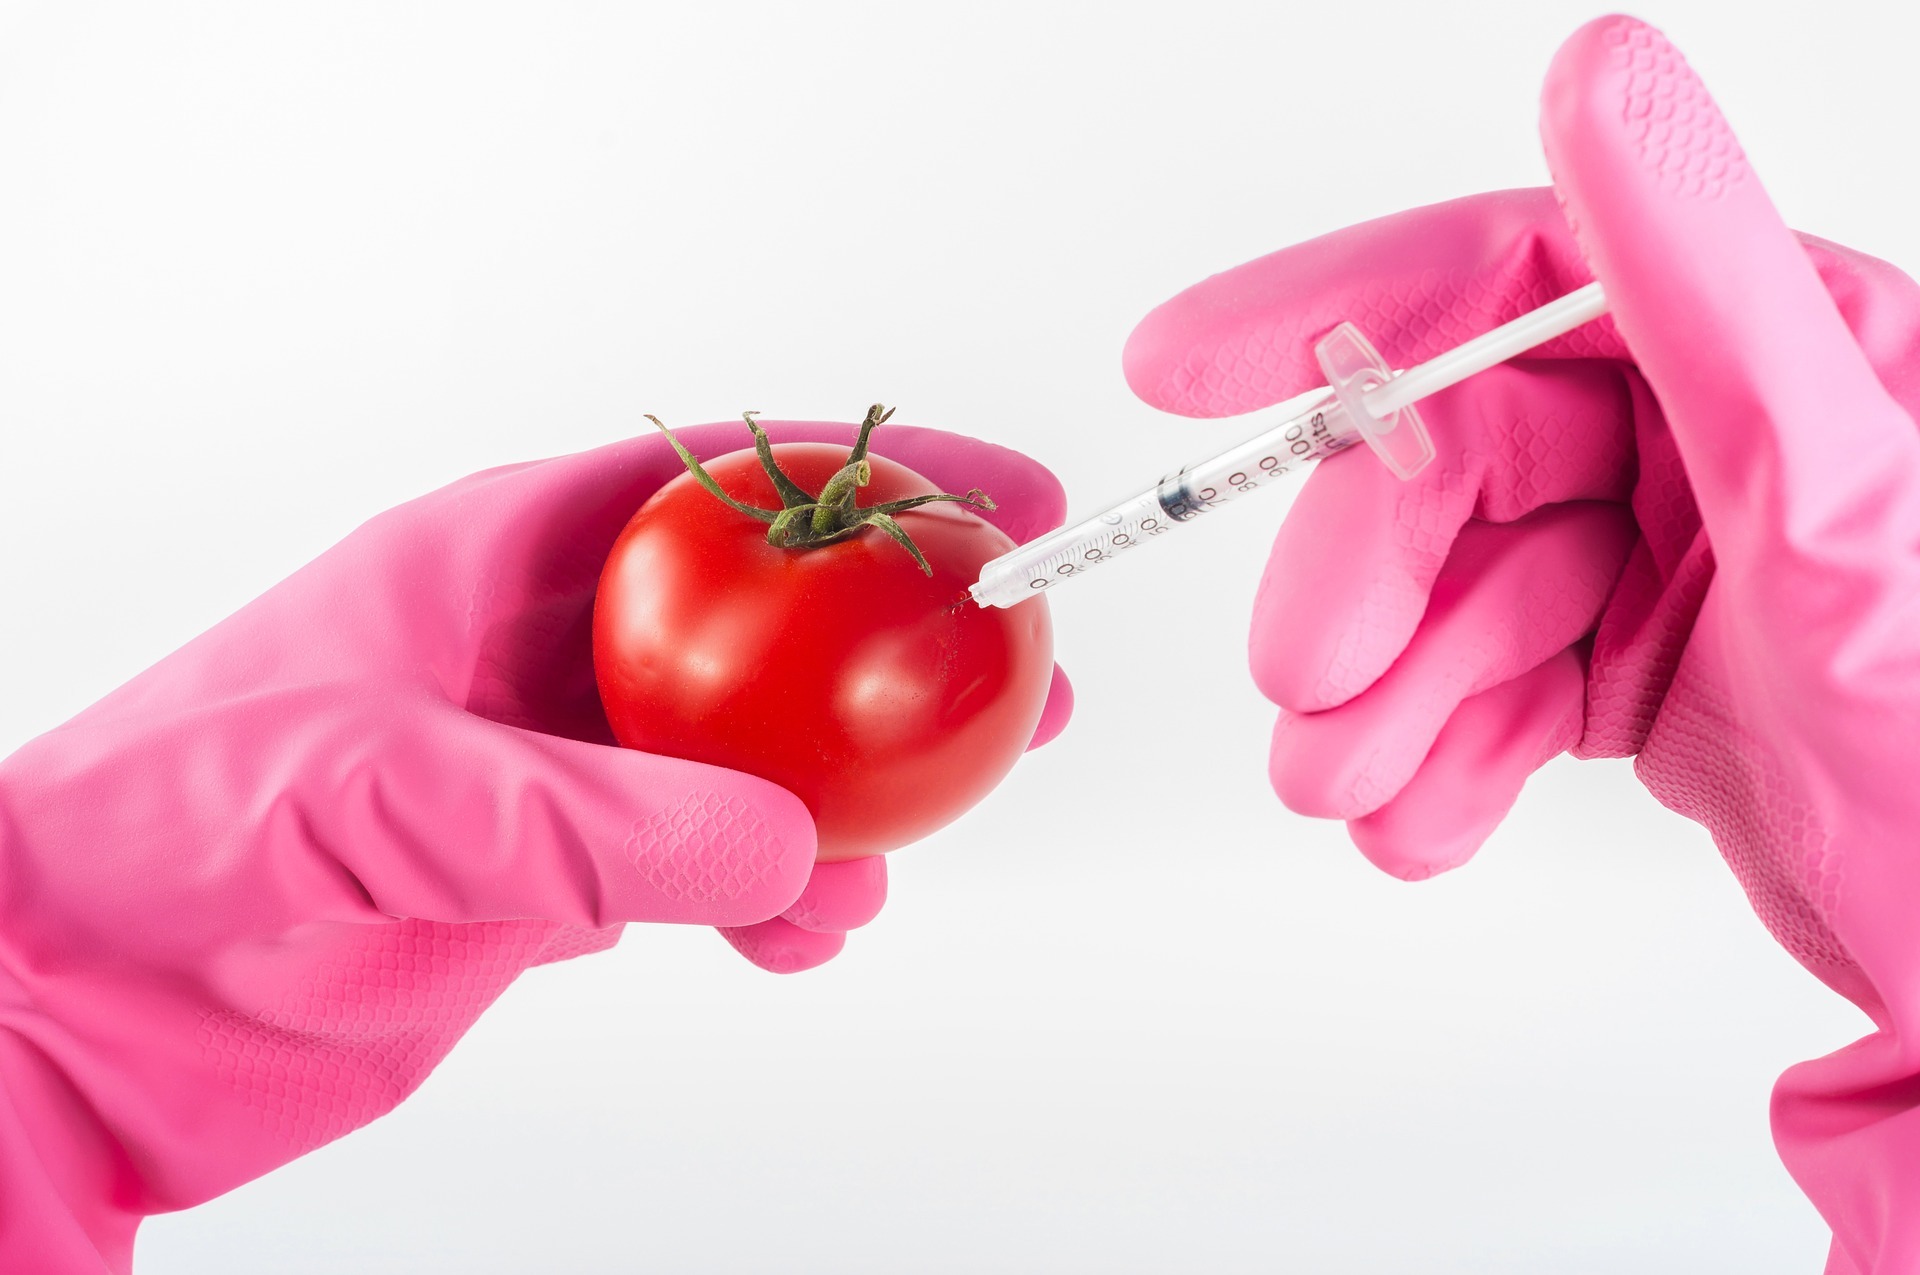 Genetic Modified tomato | जेनेटिक इंजीनियरिंग (Genetic Engineering in Hindi), सही या गलत?